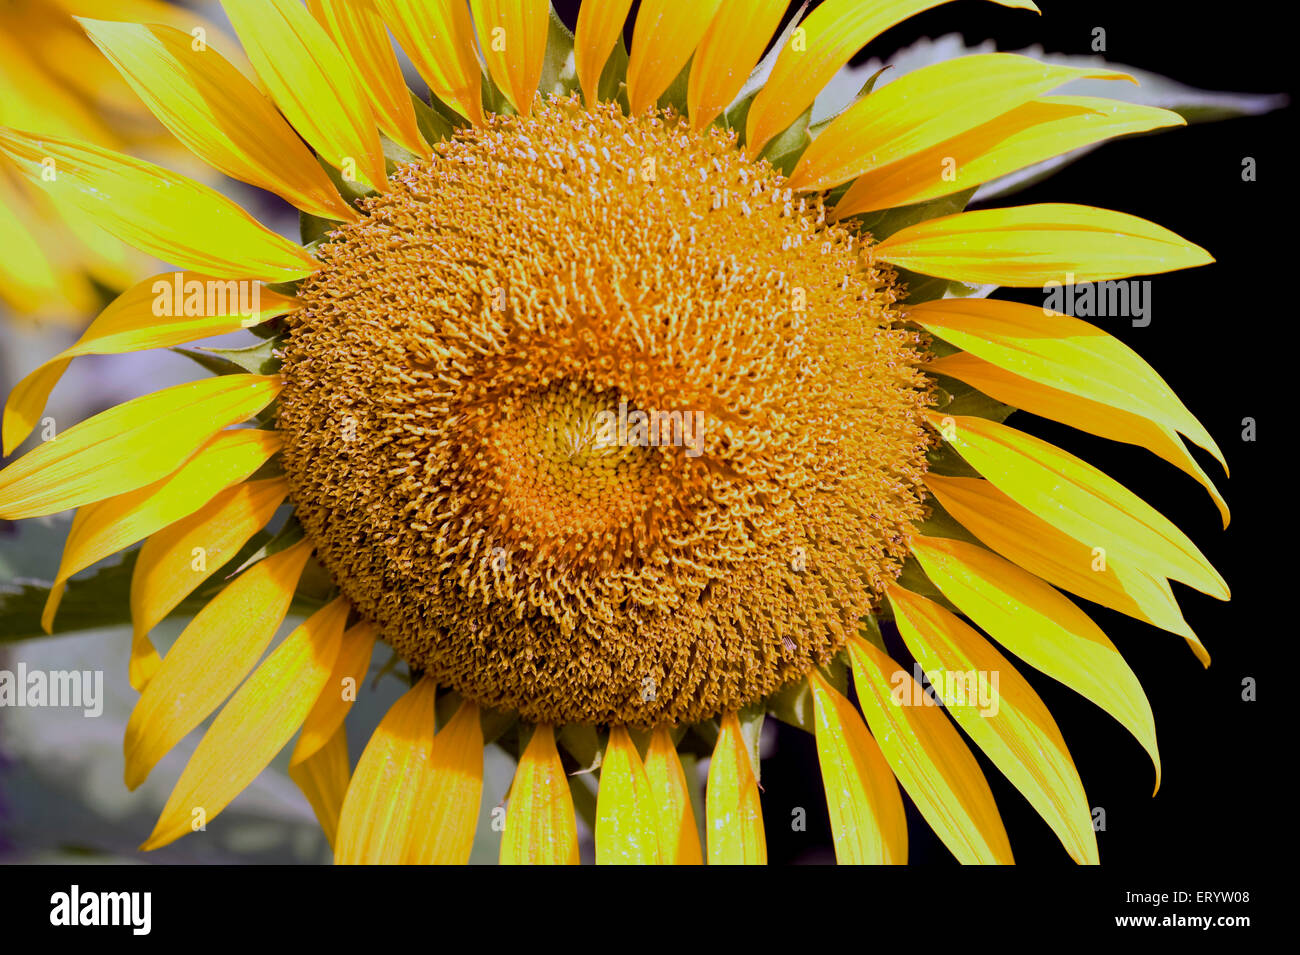 beautiful sunflower in full bloom stock photos & beautiful sunflower